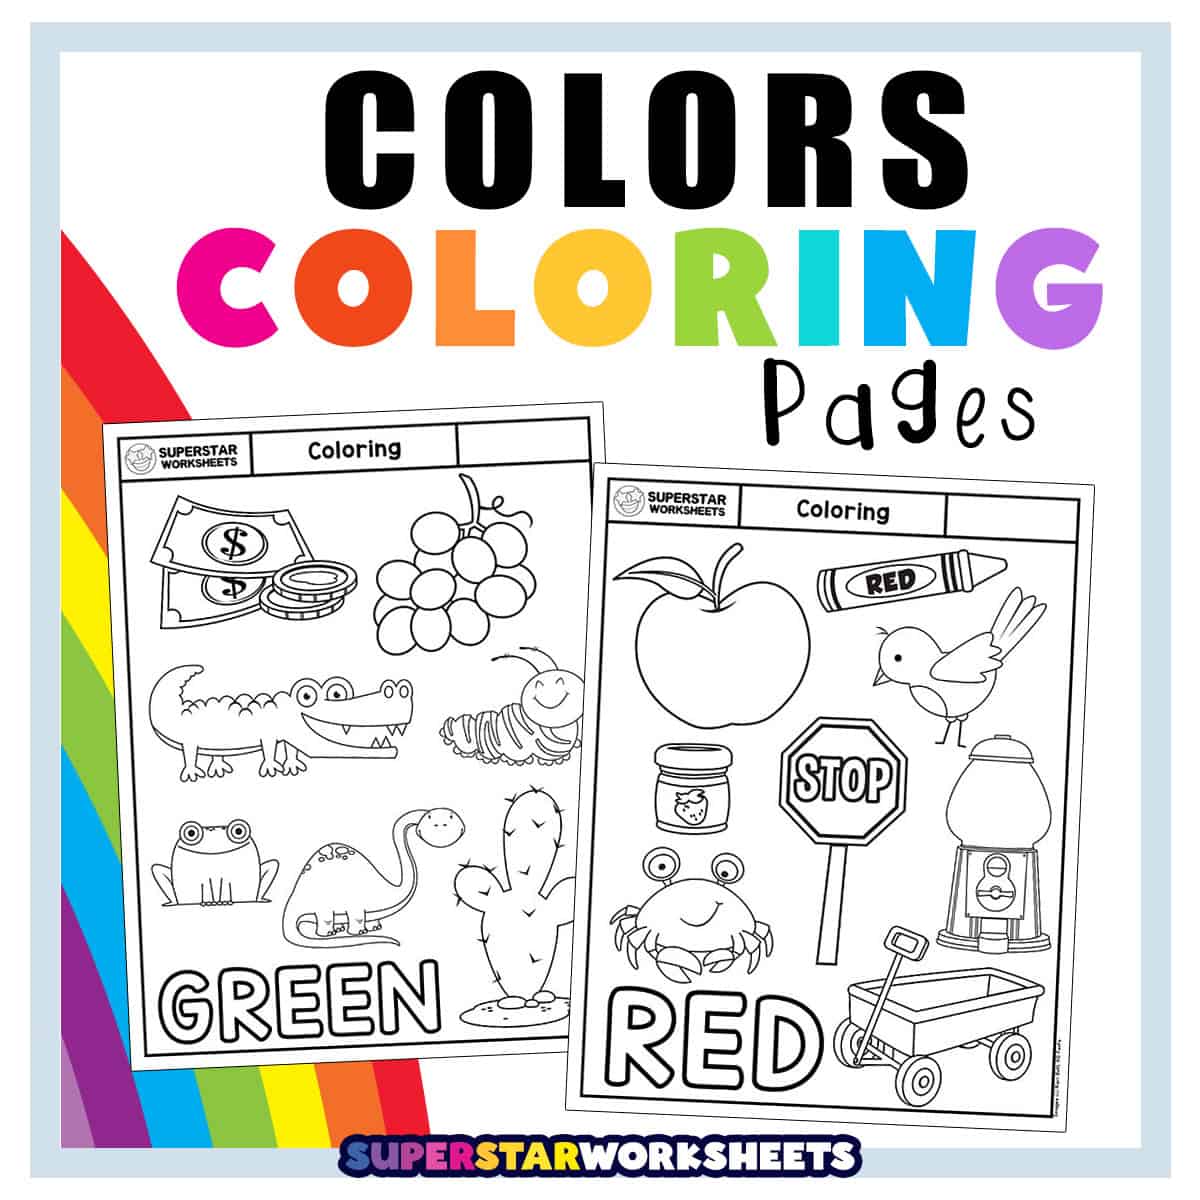 FREE Printable Color Worksheets for Kids